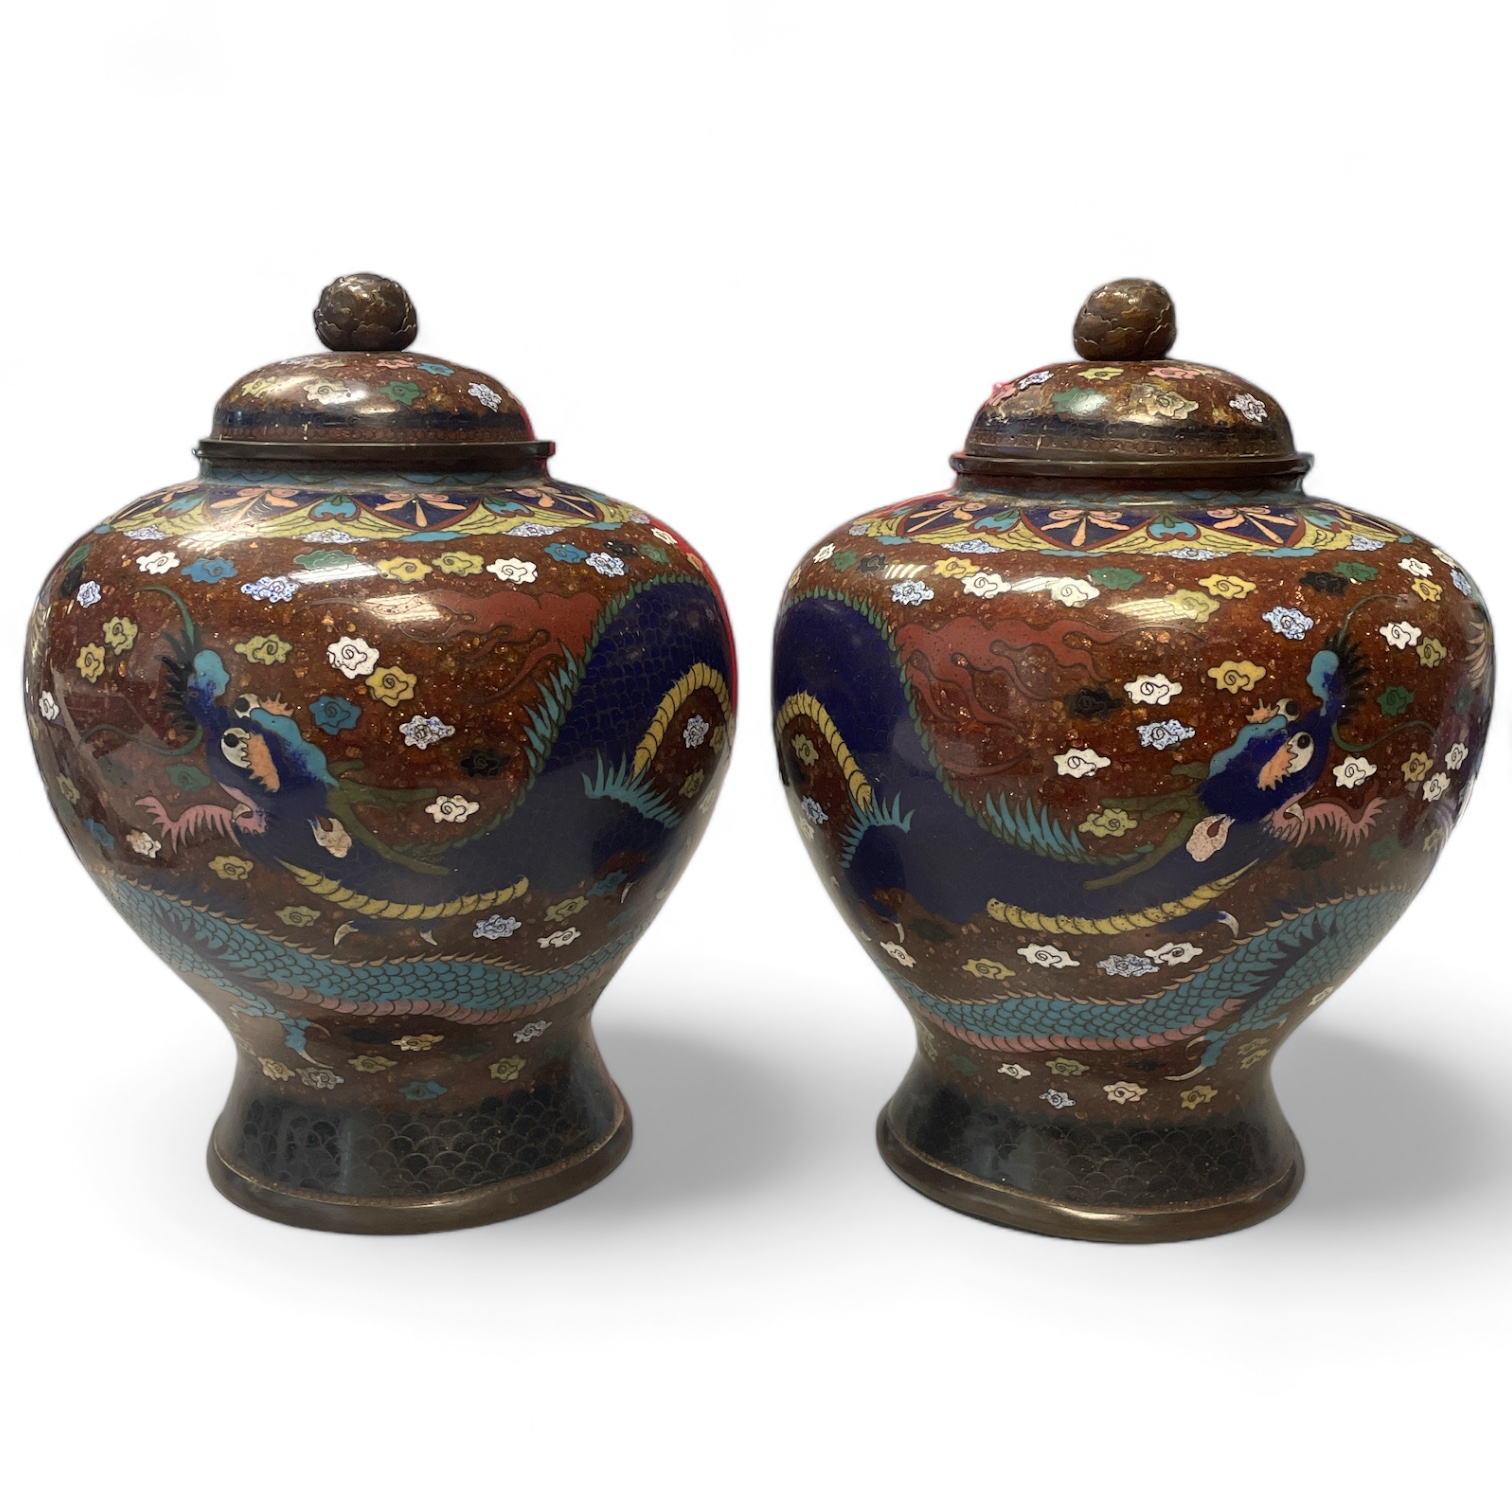 A Pair of Cloisonné enamel lidded dragon jars 17cm diameter x 23cm tall. Some damage mainly to lids